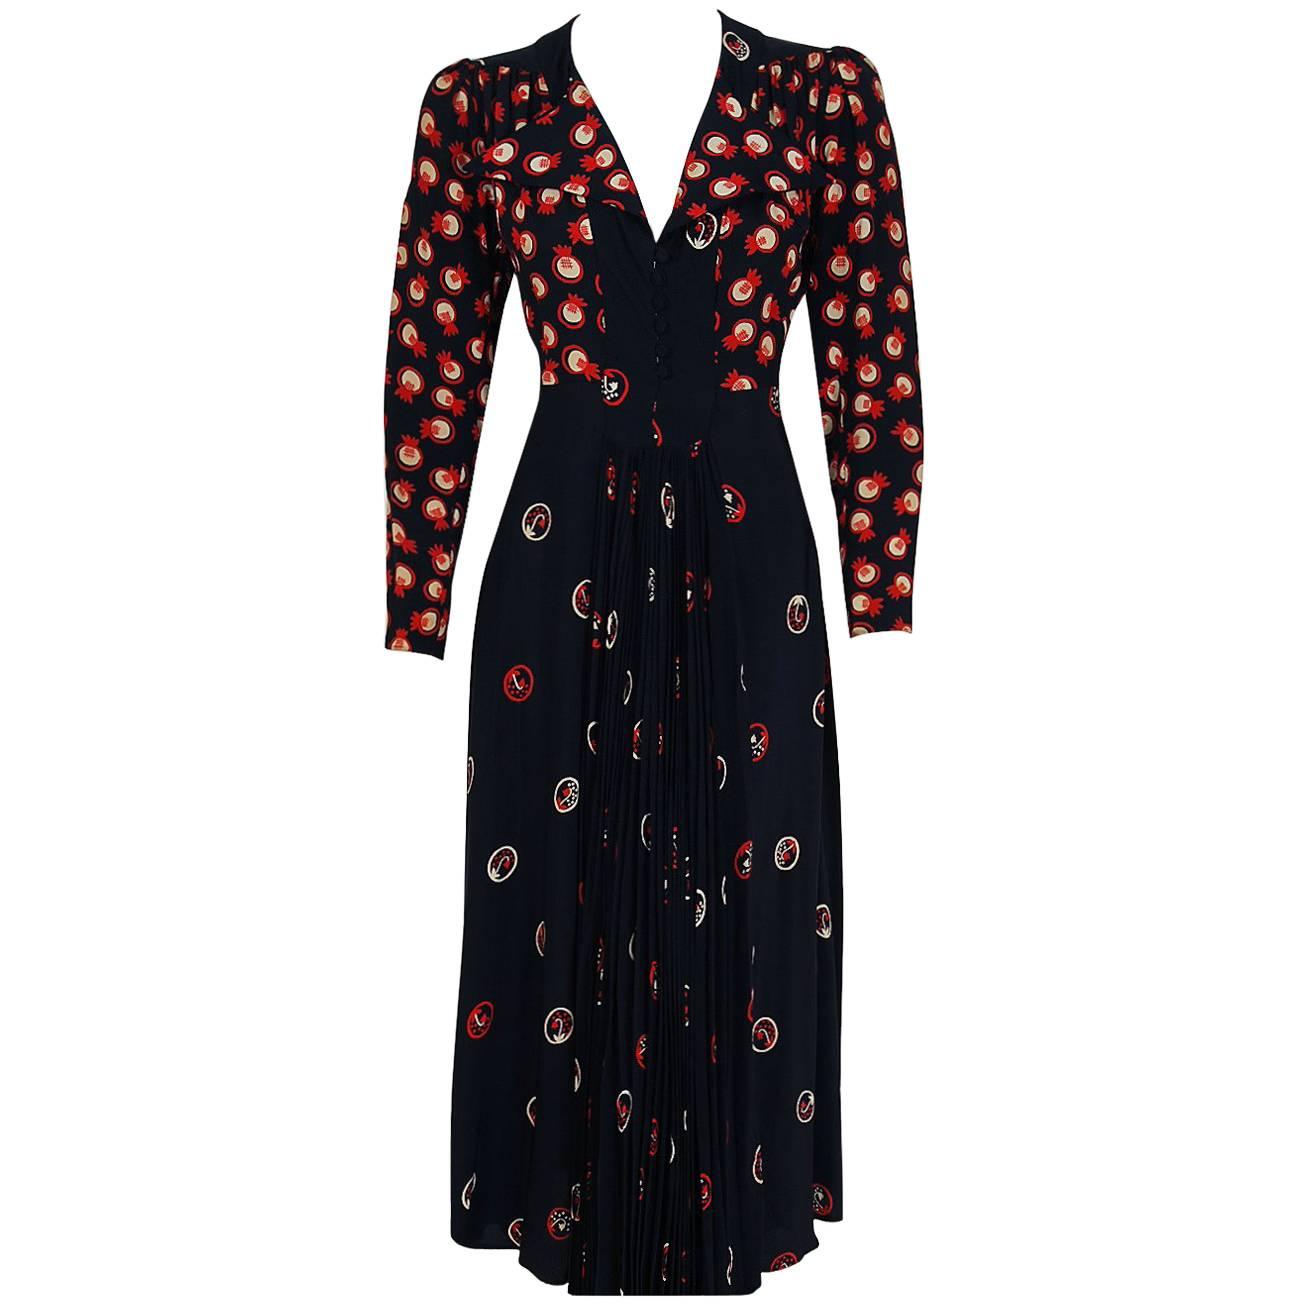 1974 Ossie Clark Black & Red Celia Birtwell Novelty Print Rayon Pleated Dress